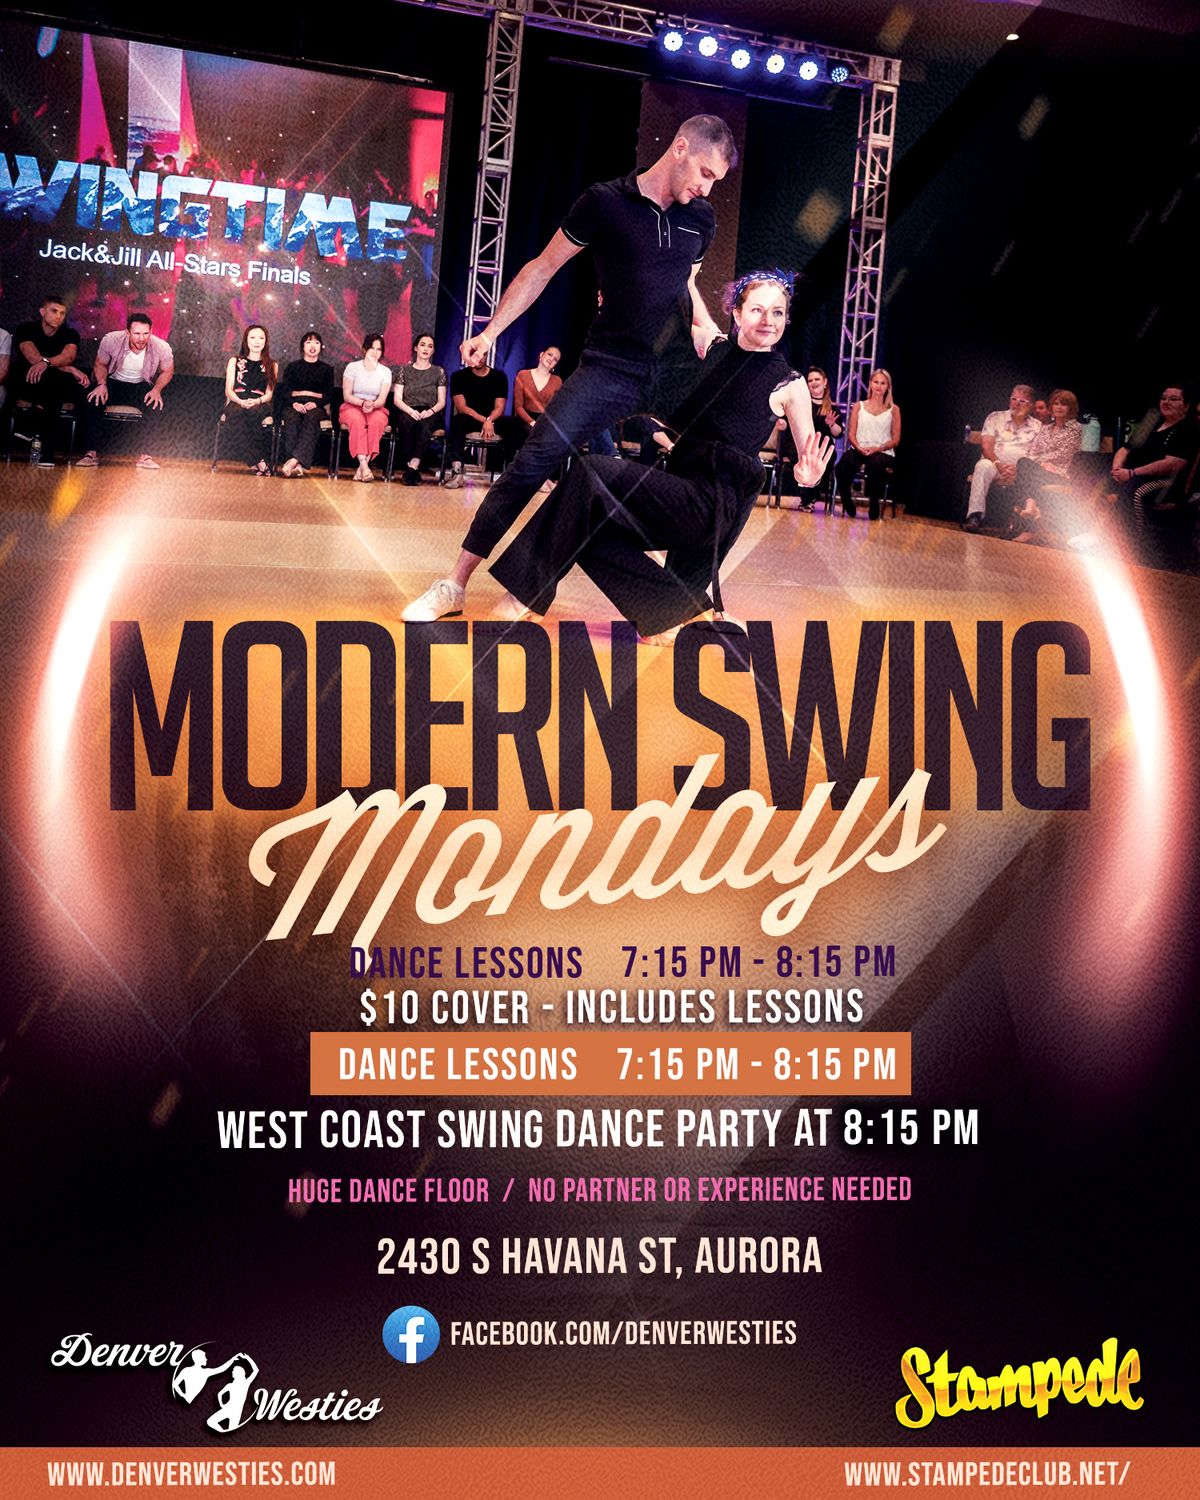 Modern Swing Monday!